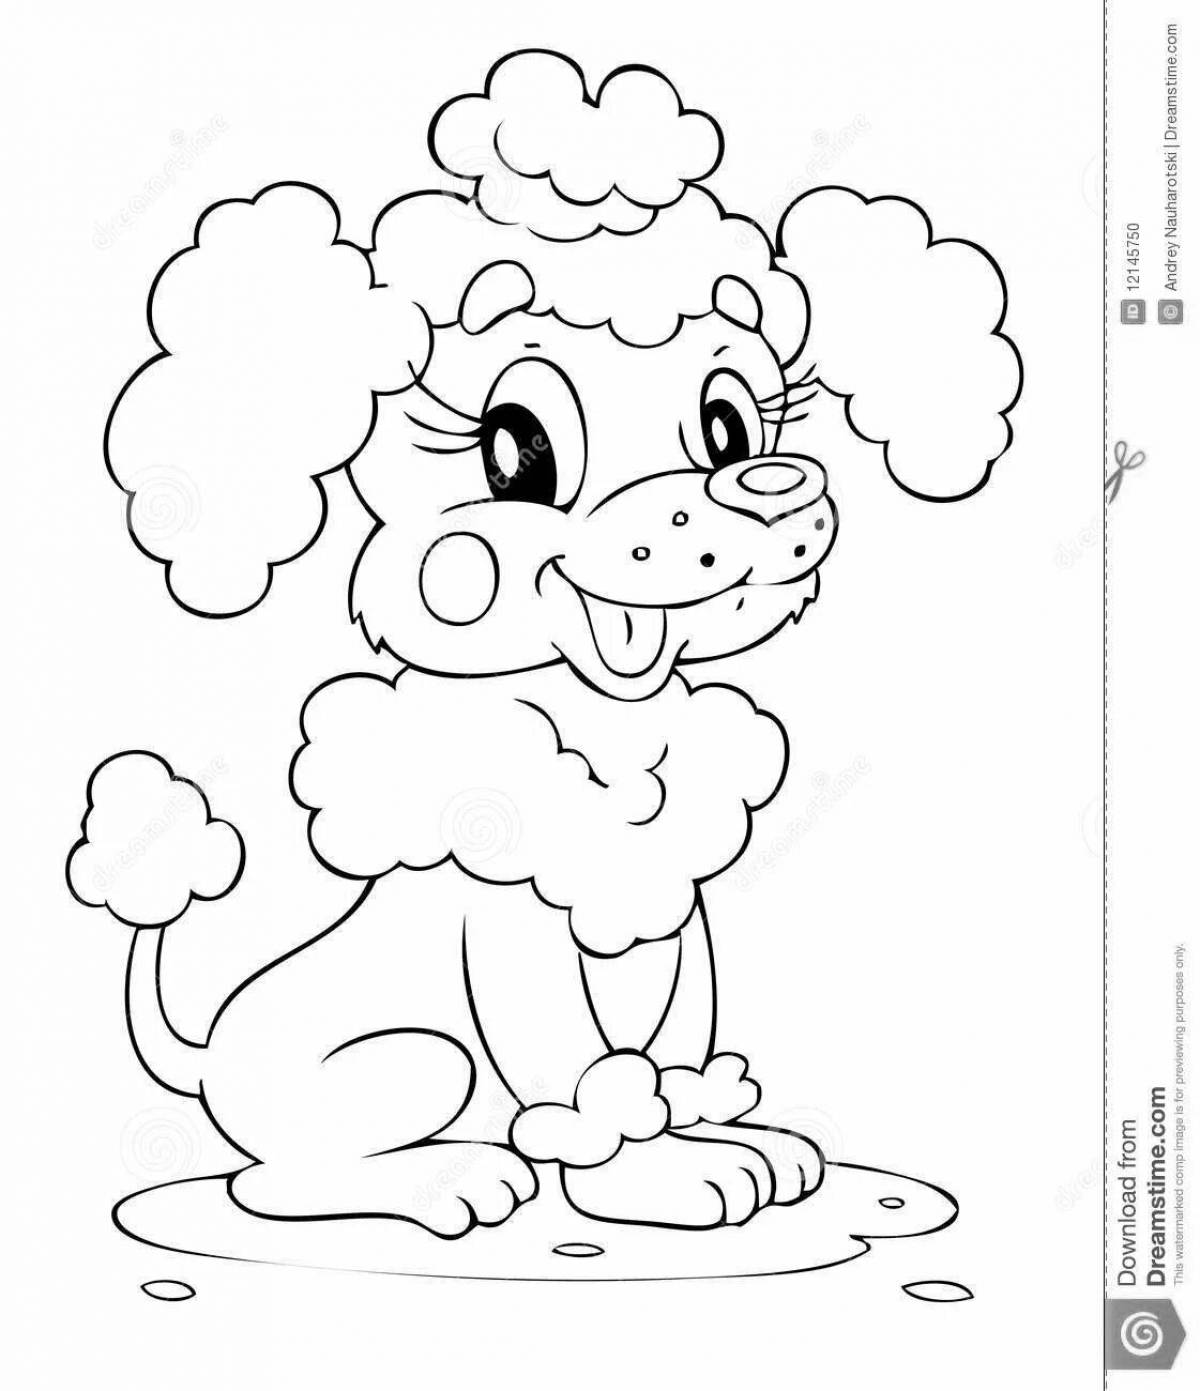 Children's poodle coloring pages